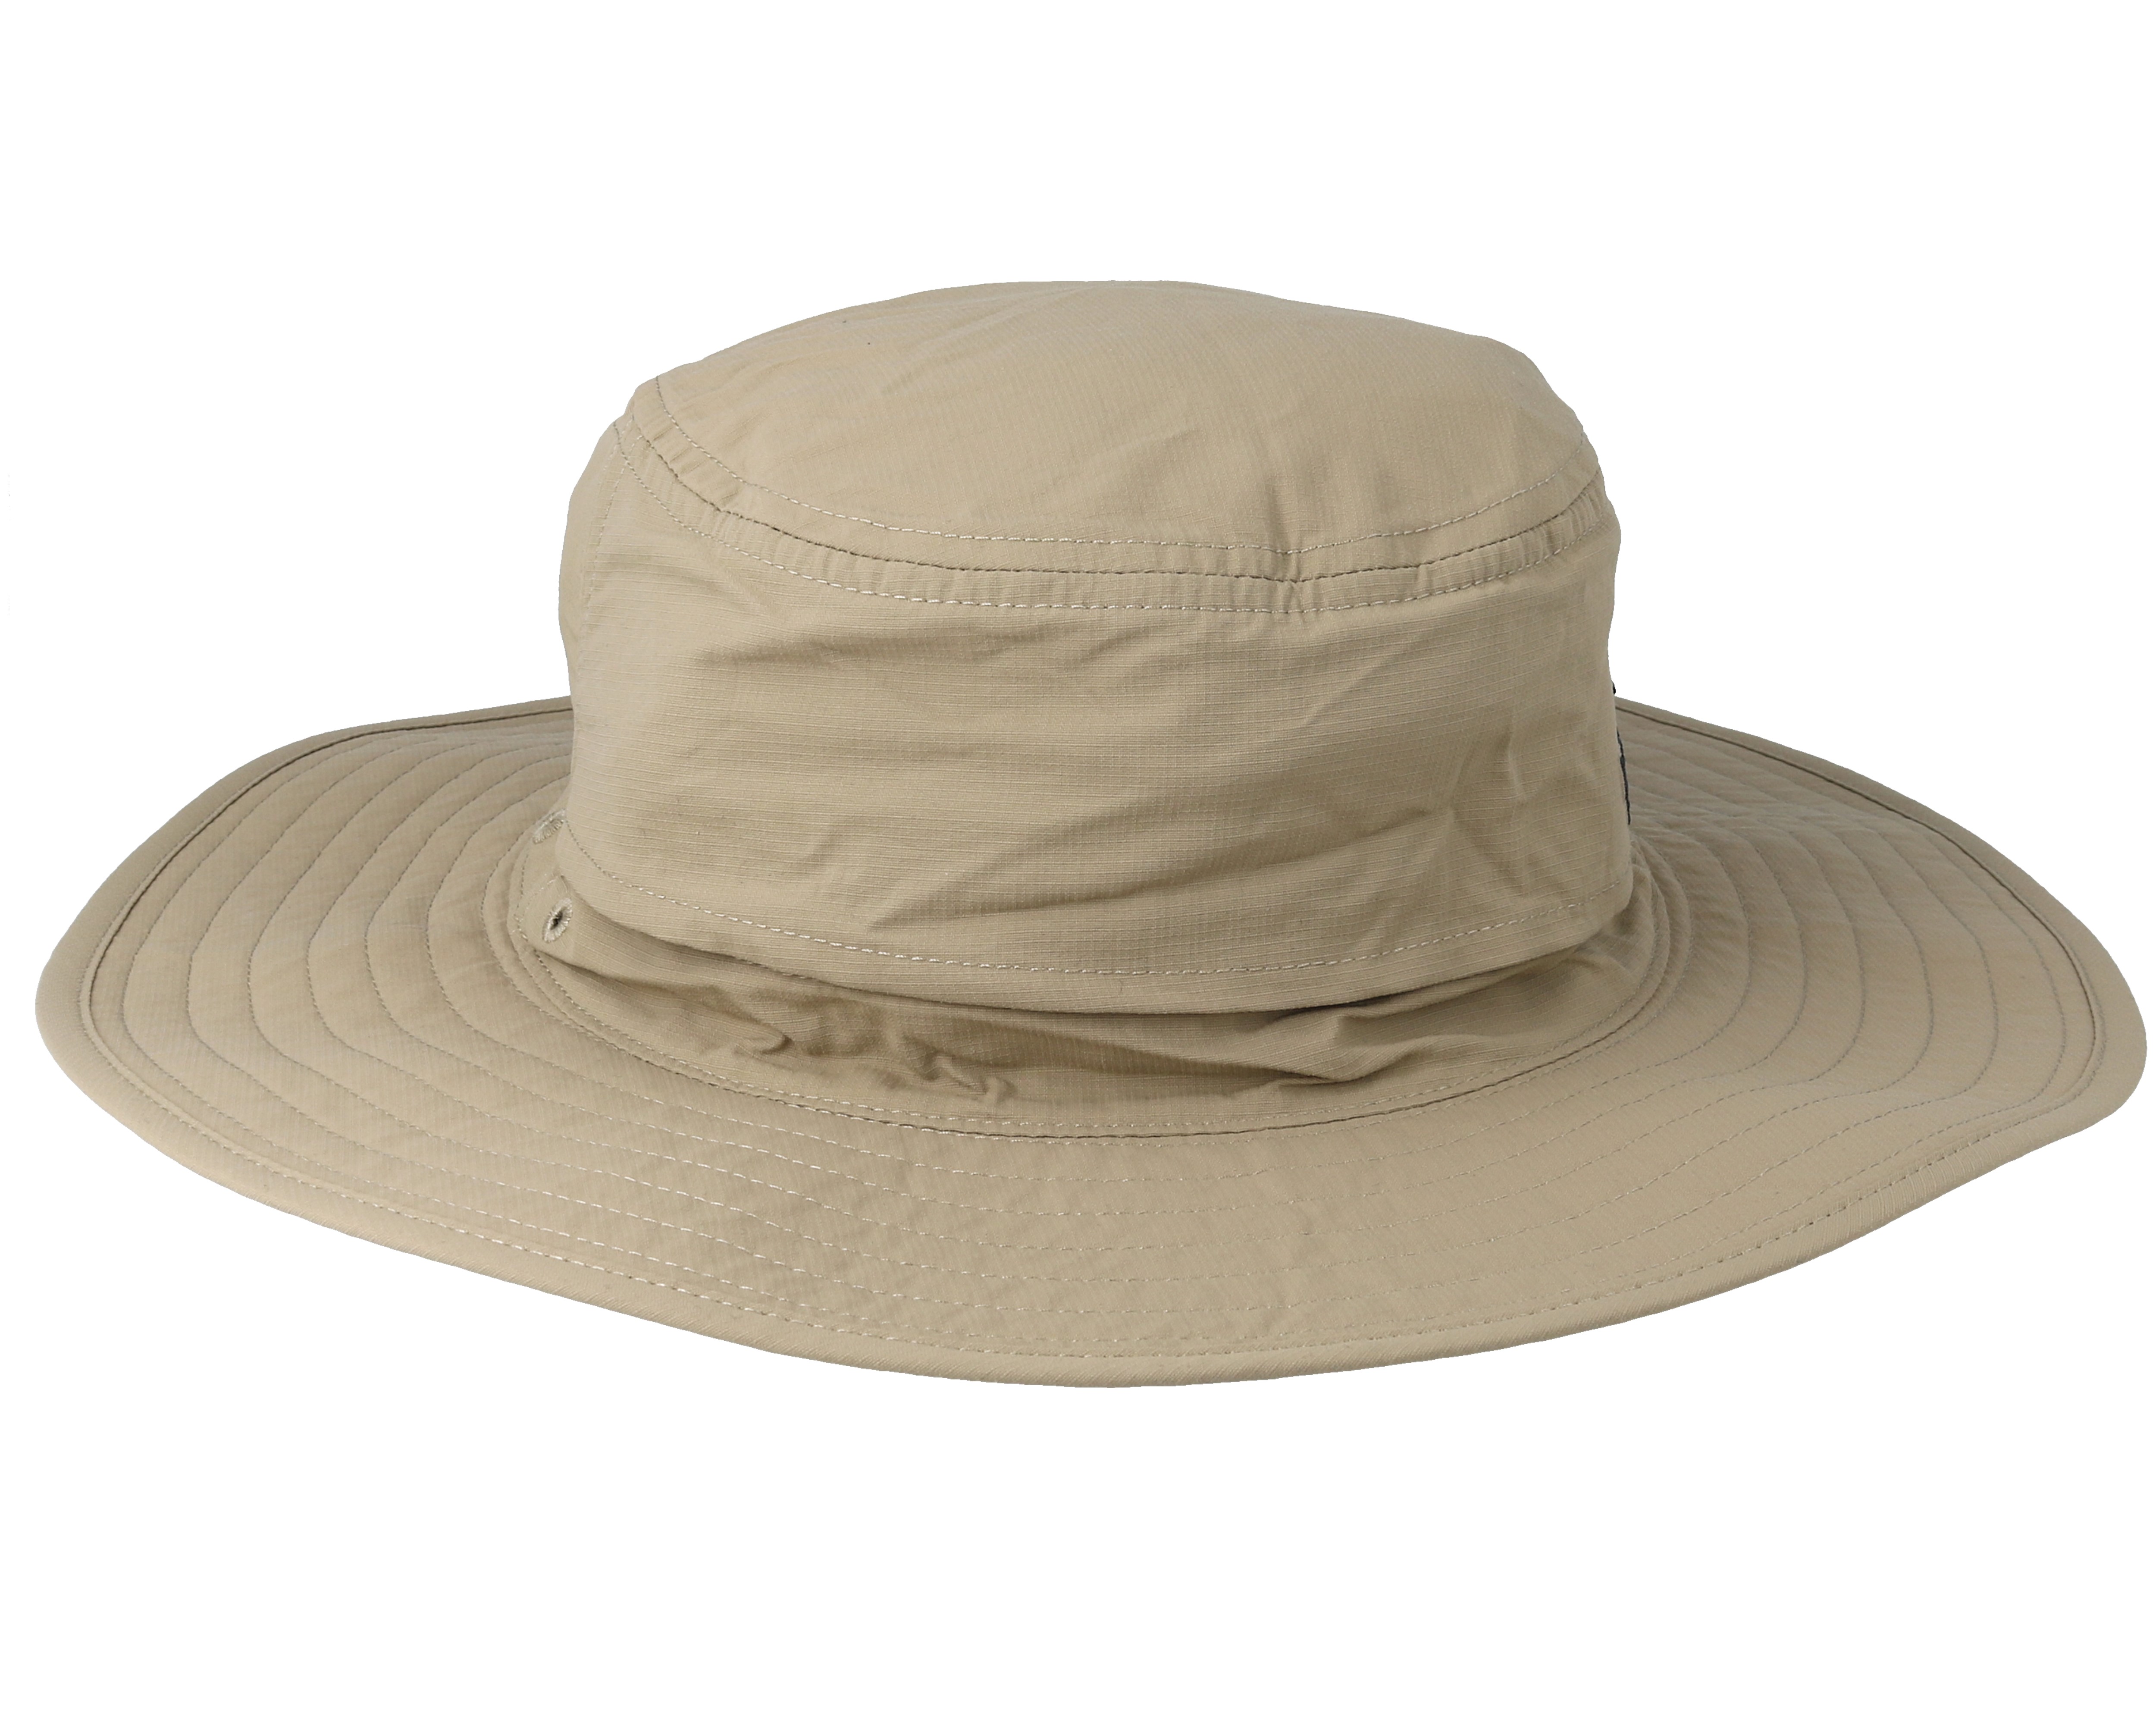 Horizon Breeze Brim Dune Beige Traveler - The North Face hats ...